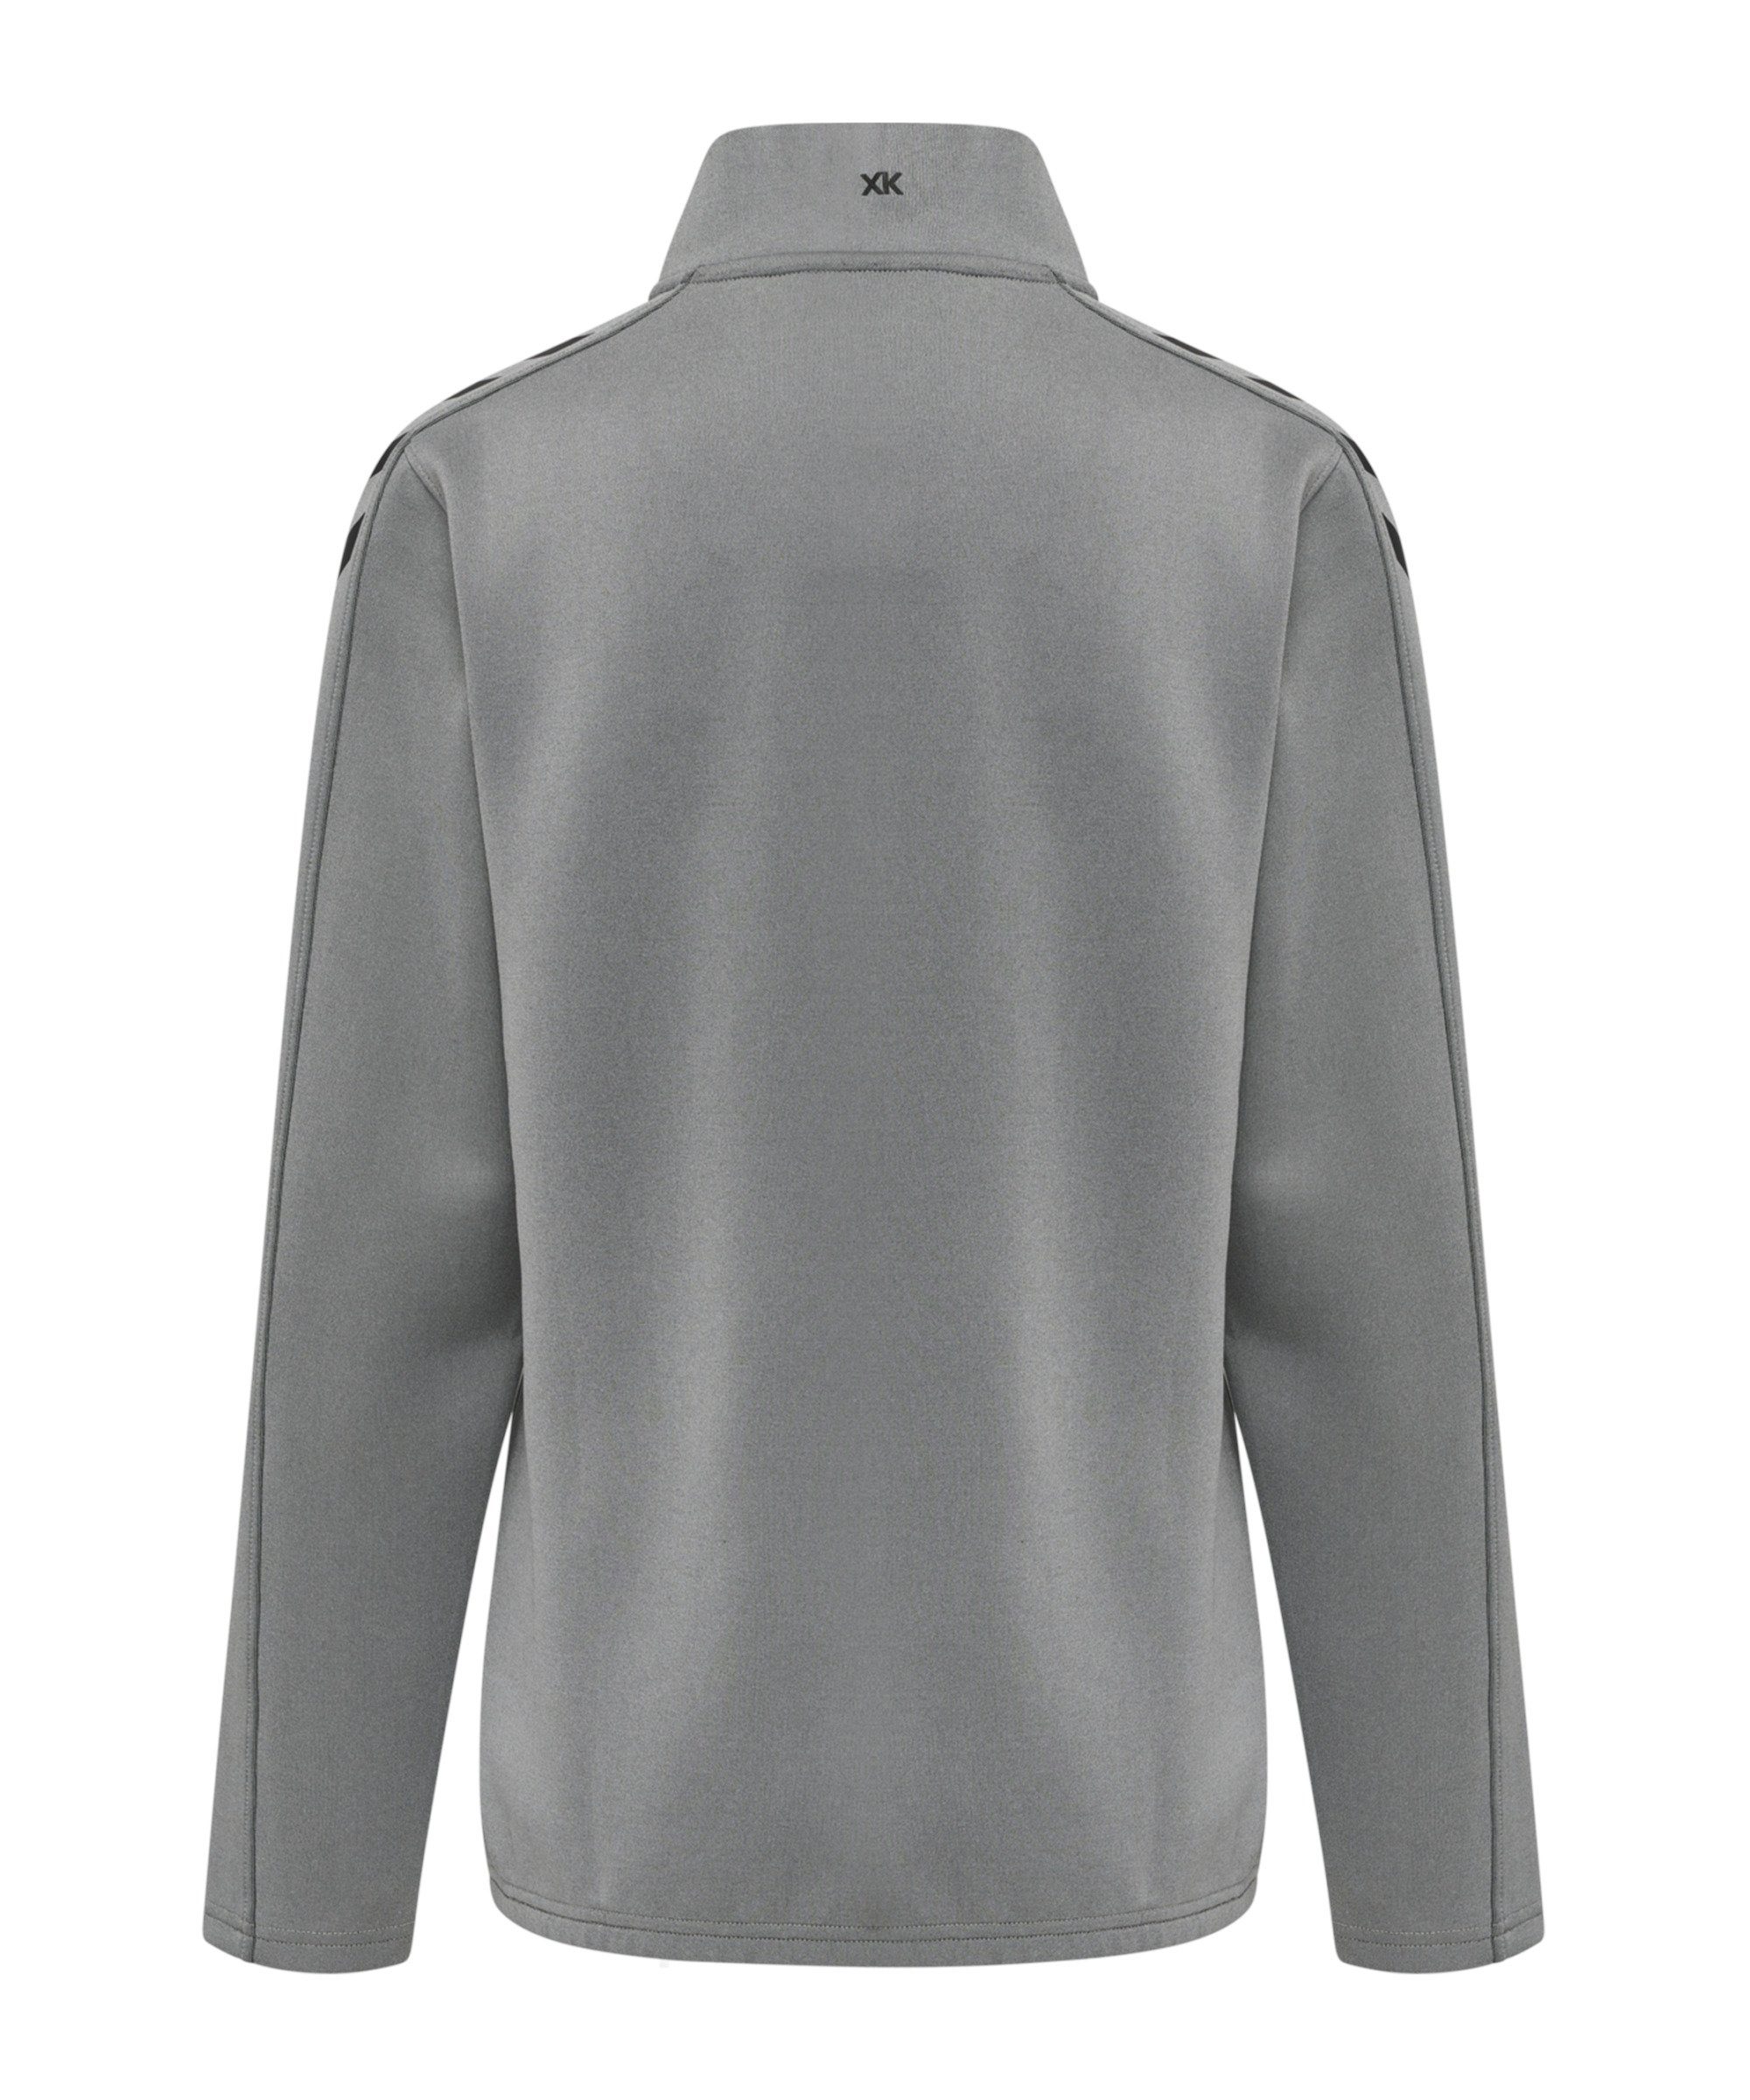 Damen XK Sweatshirt hummel HalfZip grau Sweater hmlCORE